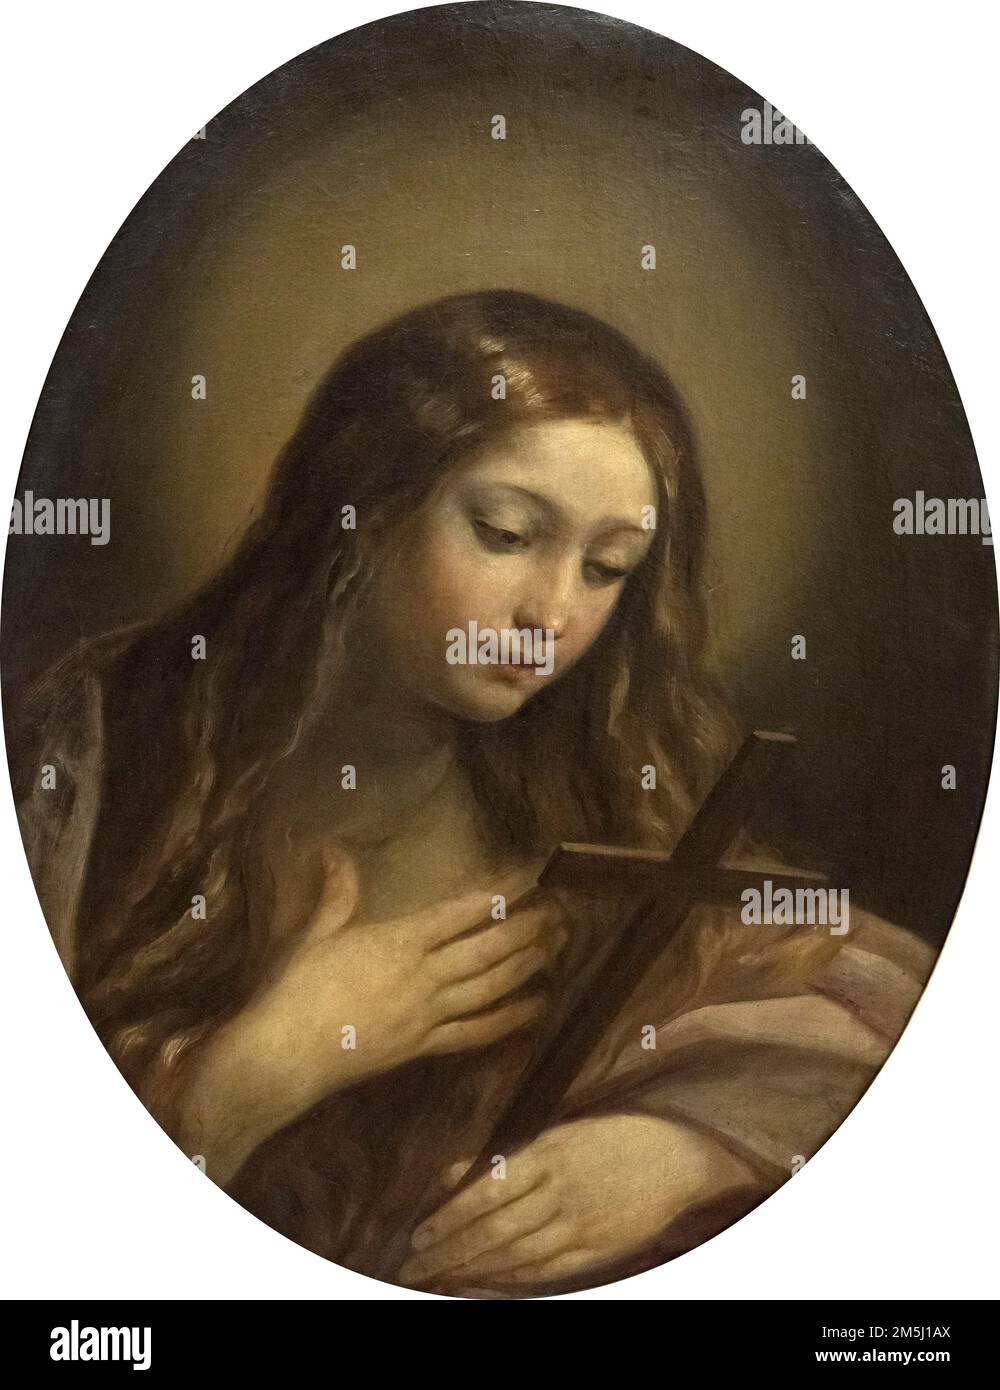 Guido Reni (1575-1642), Penitent Magdalene, Ca. 1635-1640. Maddalena penitente. Kapitolinische Museen, Rom, Italien. Öl auf Segeltuch. H 77,5 x 59 cm Inv. Stockfoto